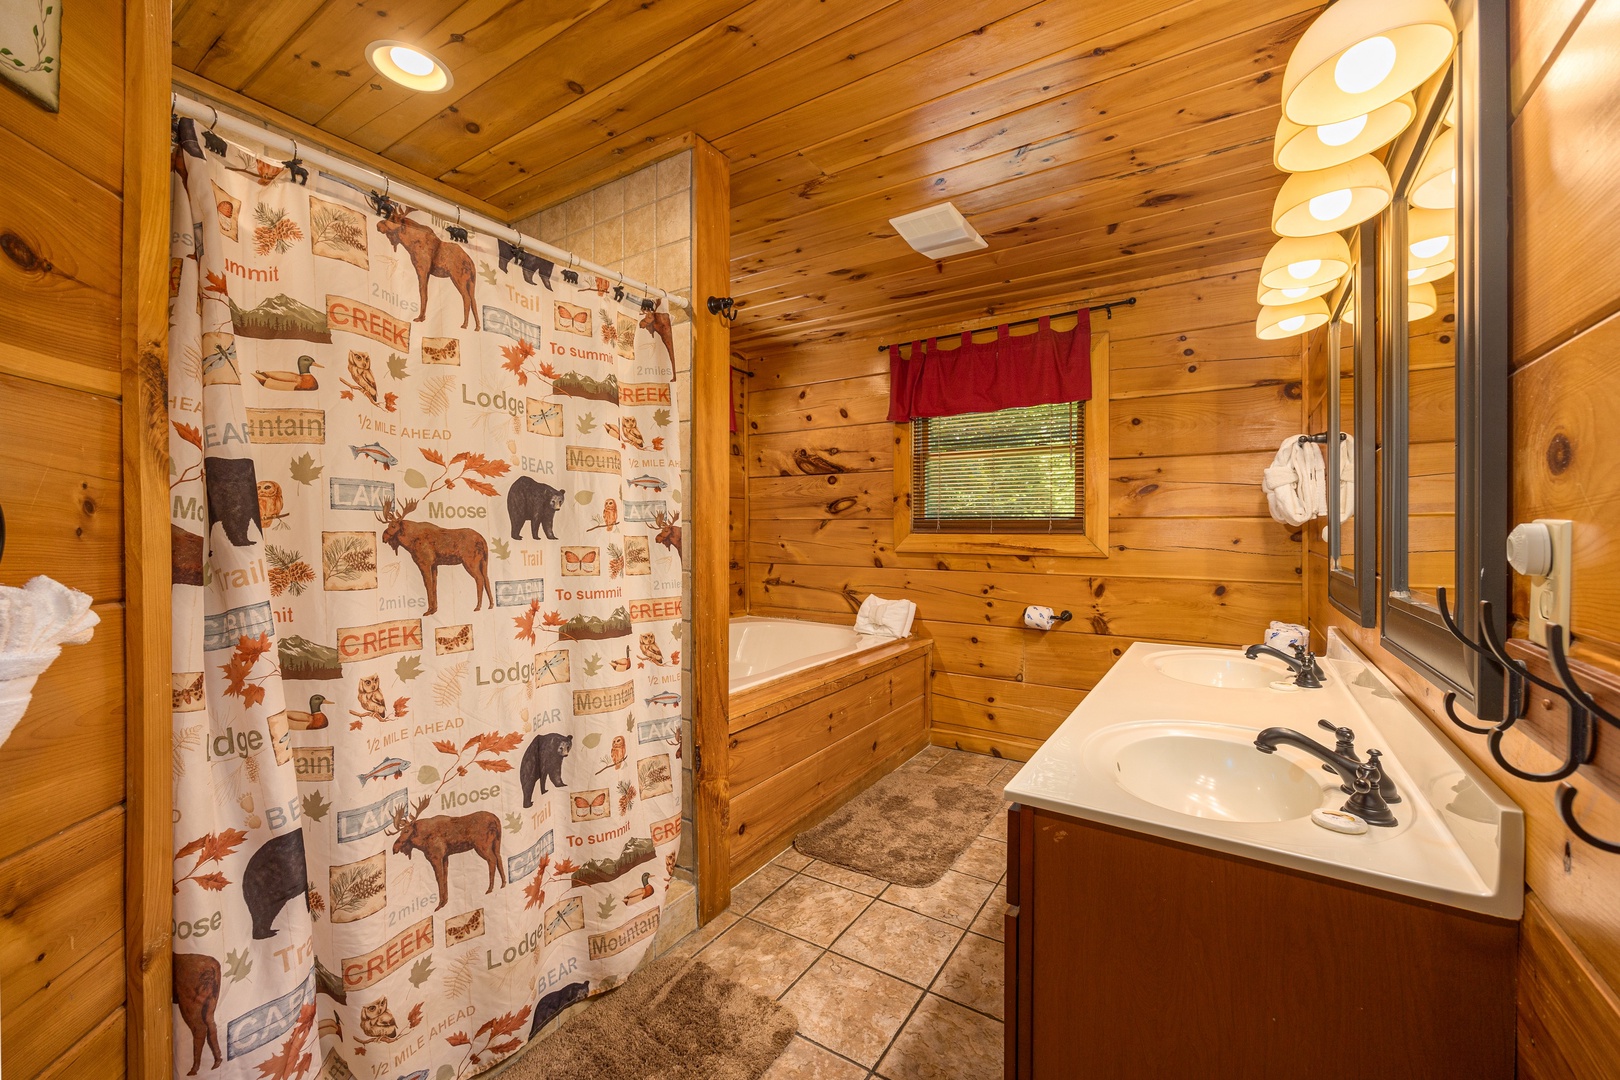 Bathroom at Moonbeams & Cabin Dreams, a 3 bedroom cabin rental located in Pigeon Forge